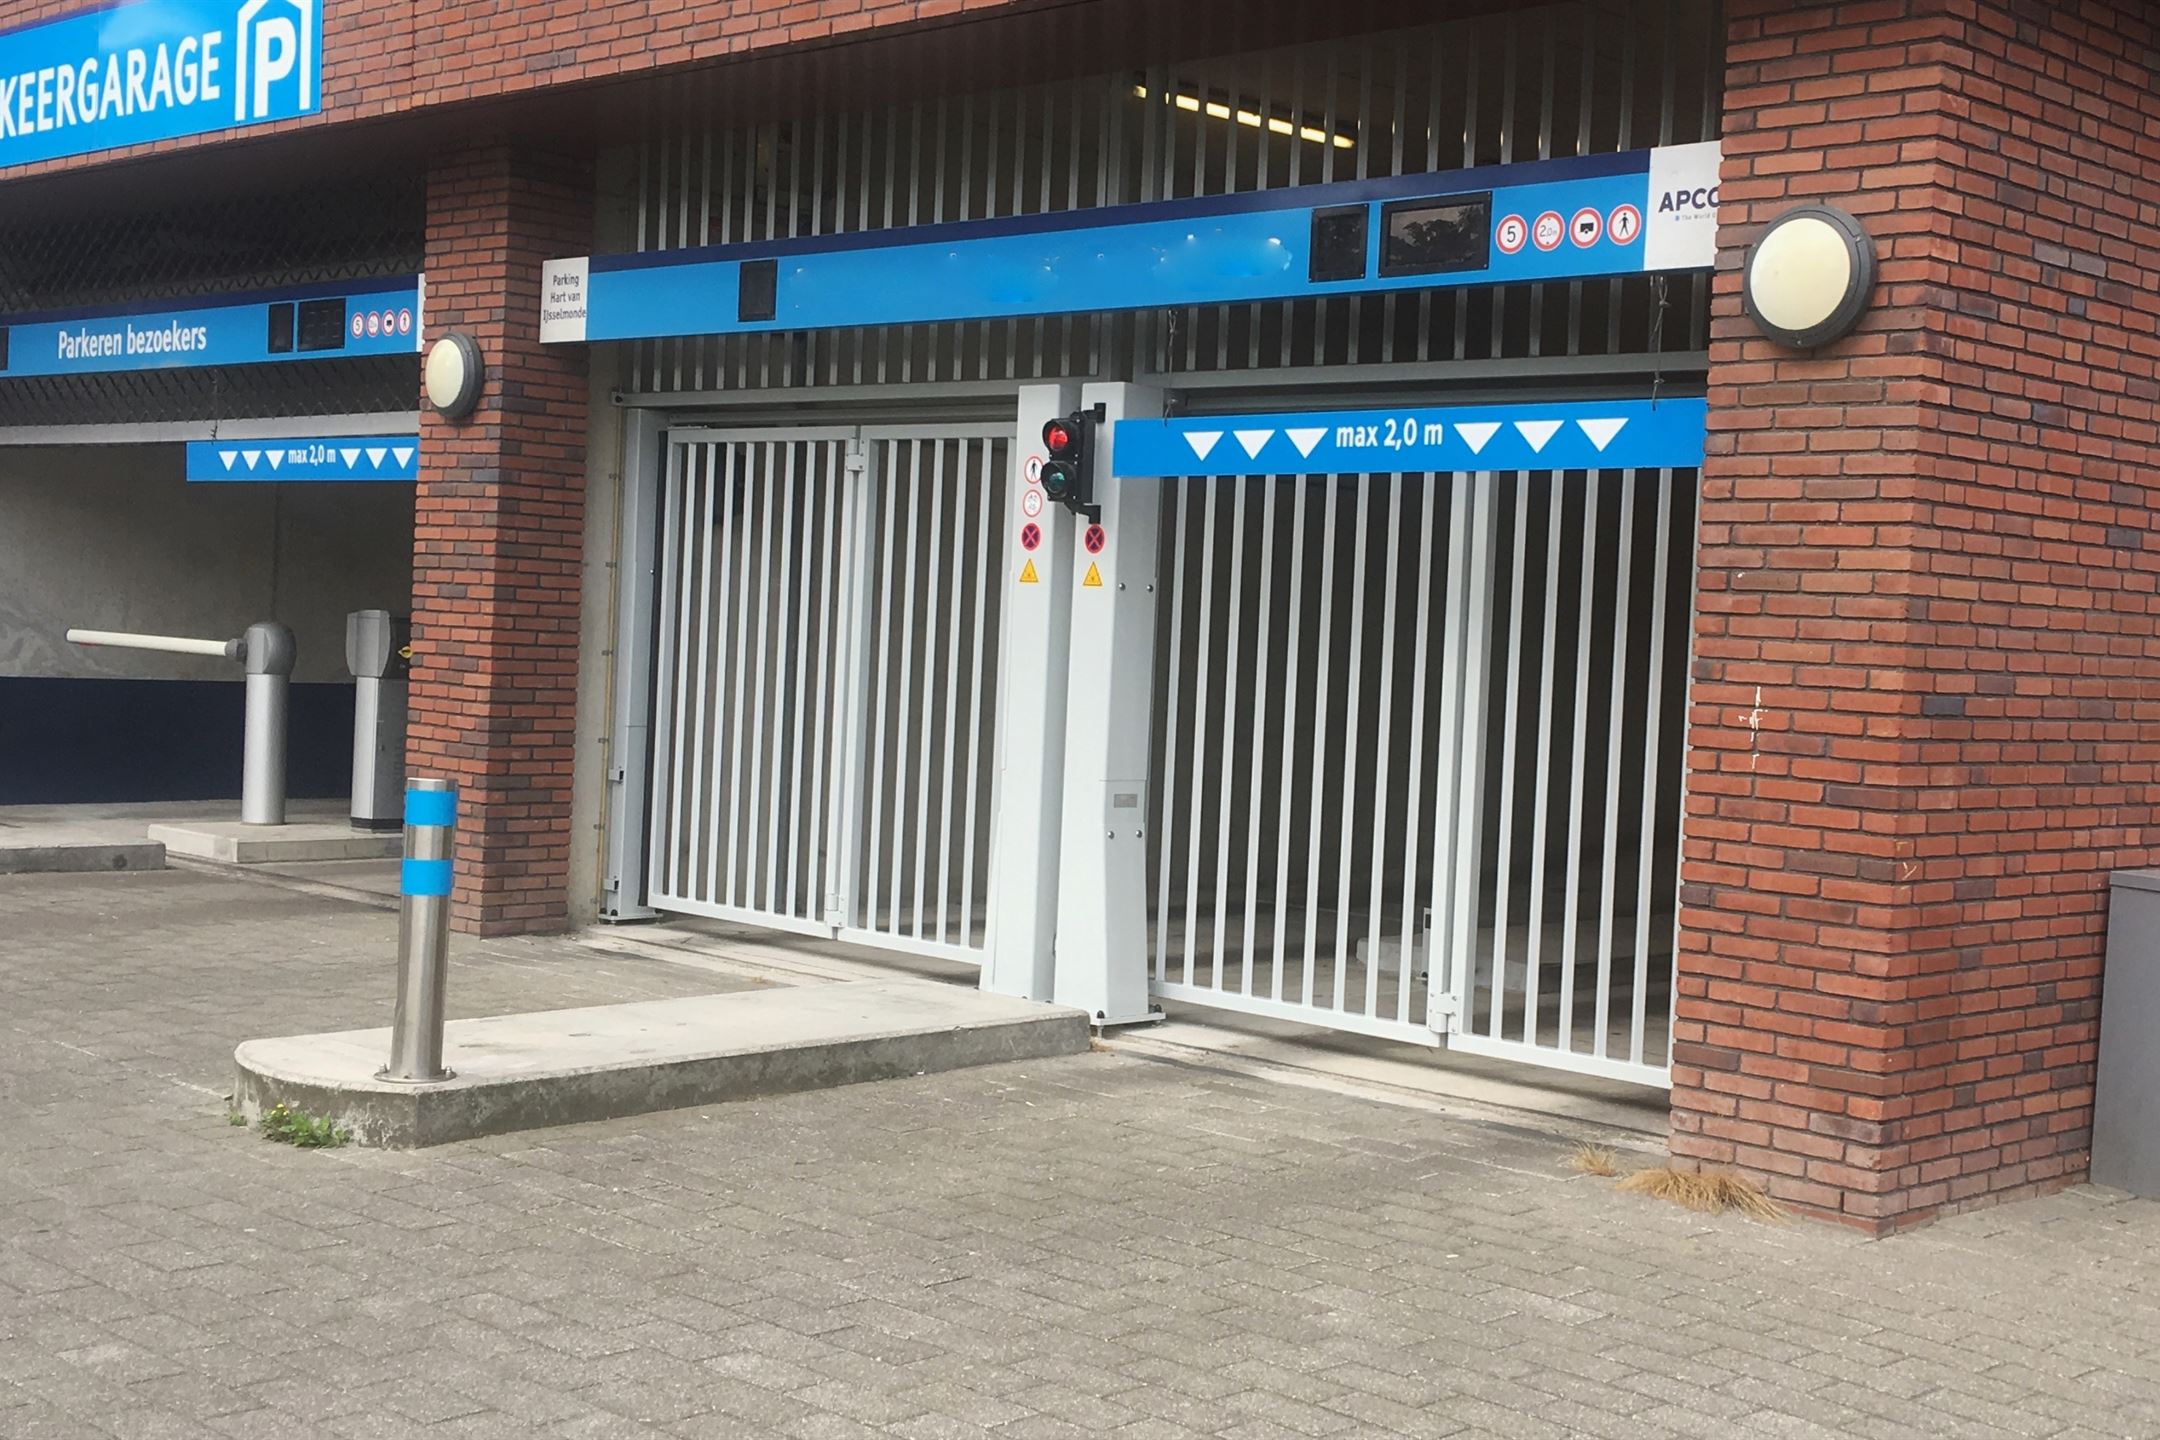 Parking Hoogmonde Rotterdam (1)